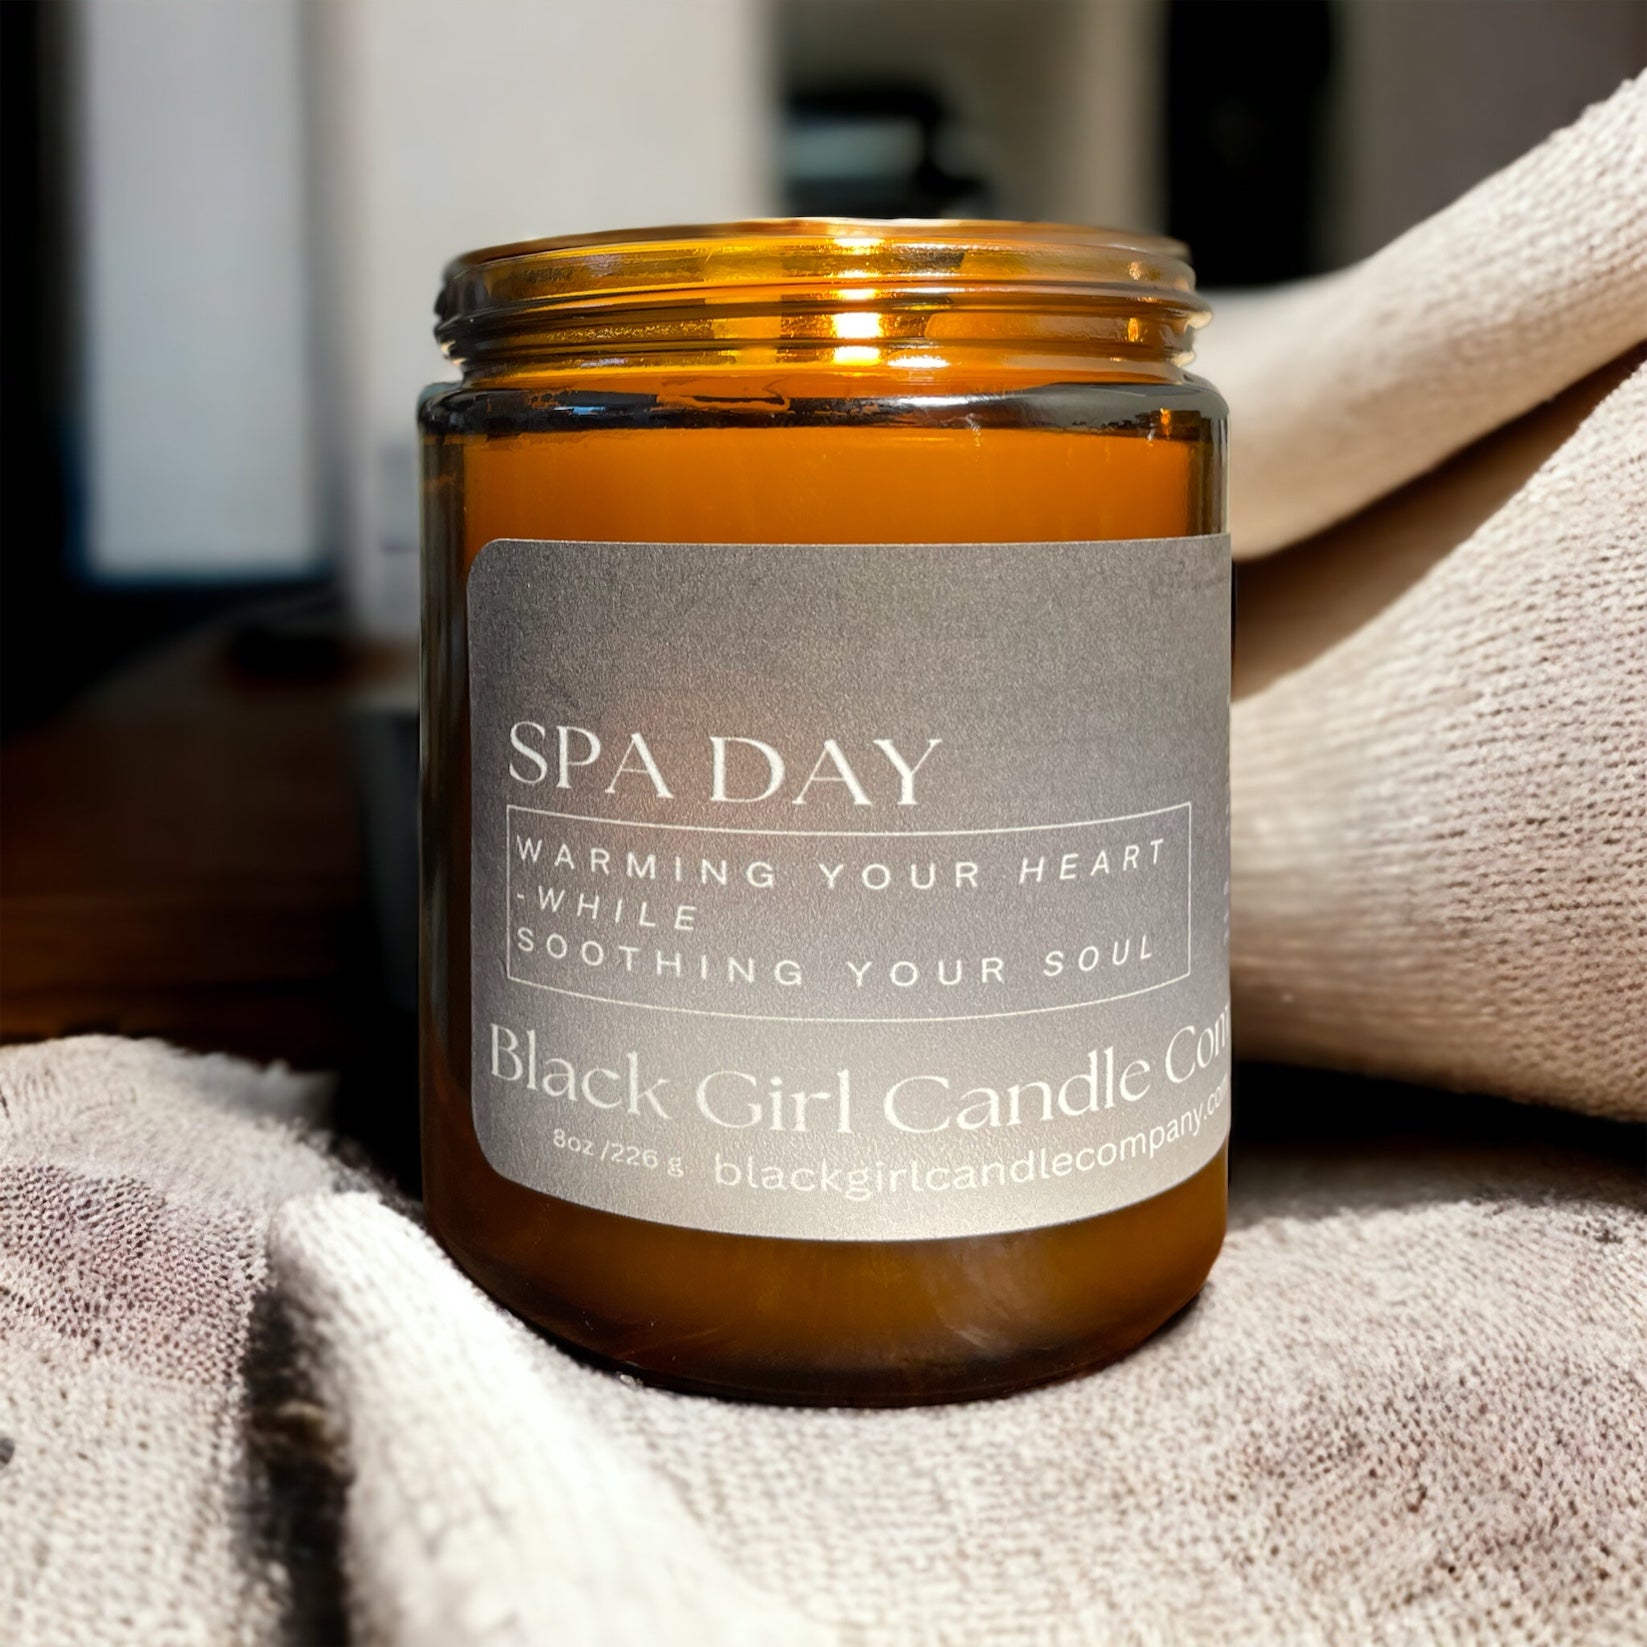 Balsam & Cedar Pillar Candle – Mealeys Gift And Sauna Shop